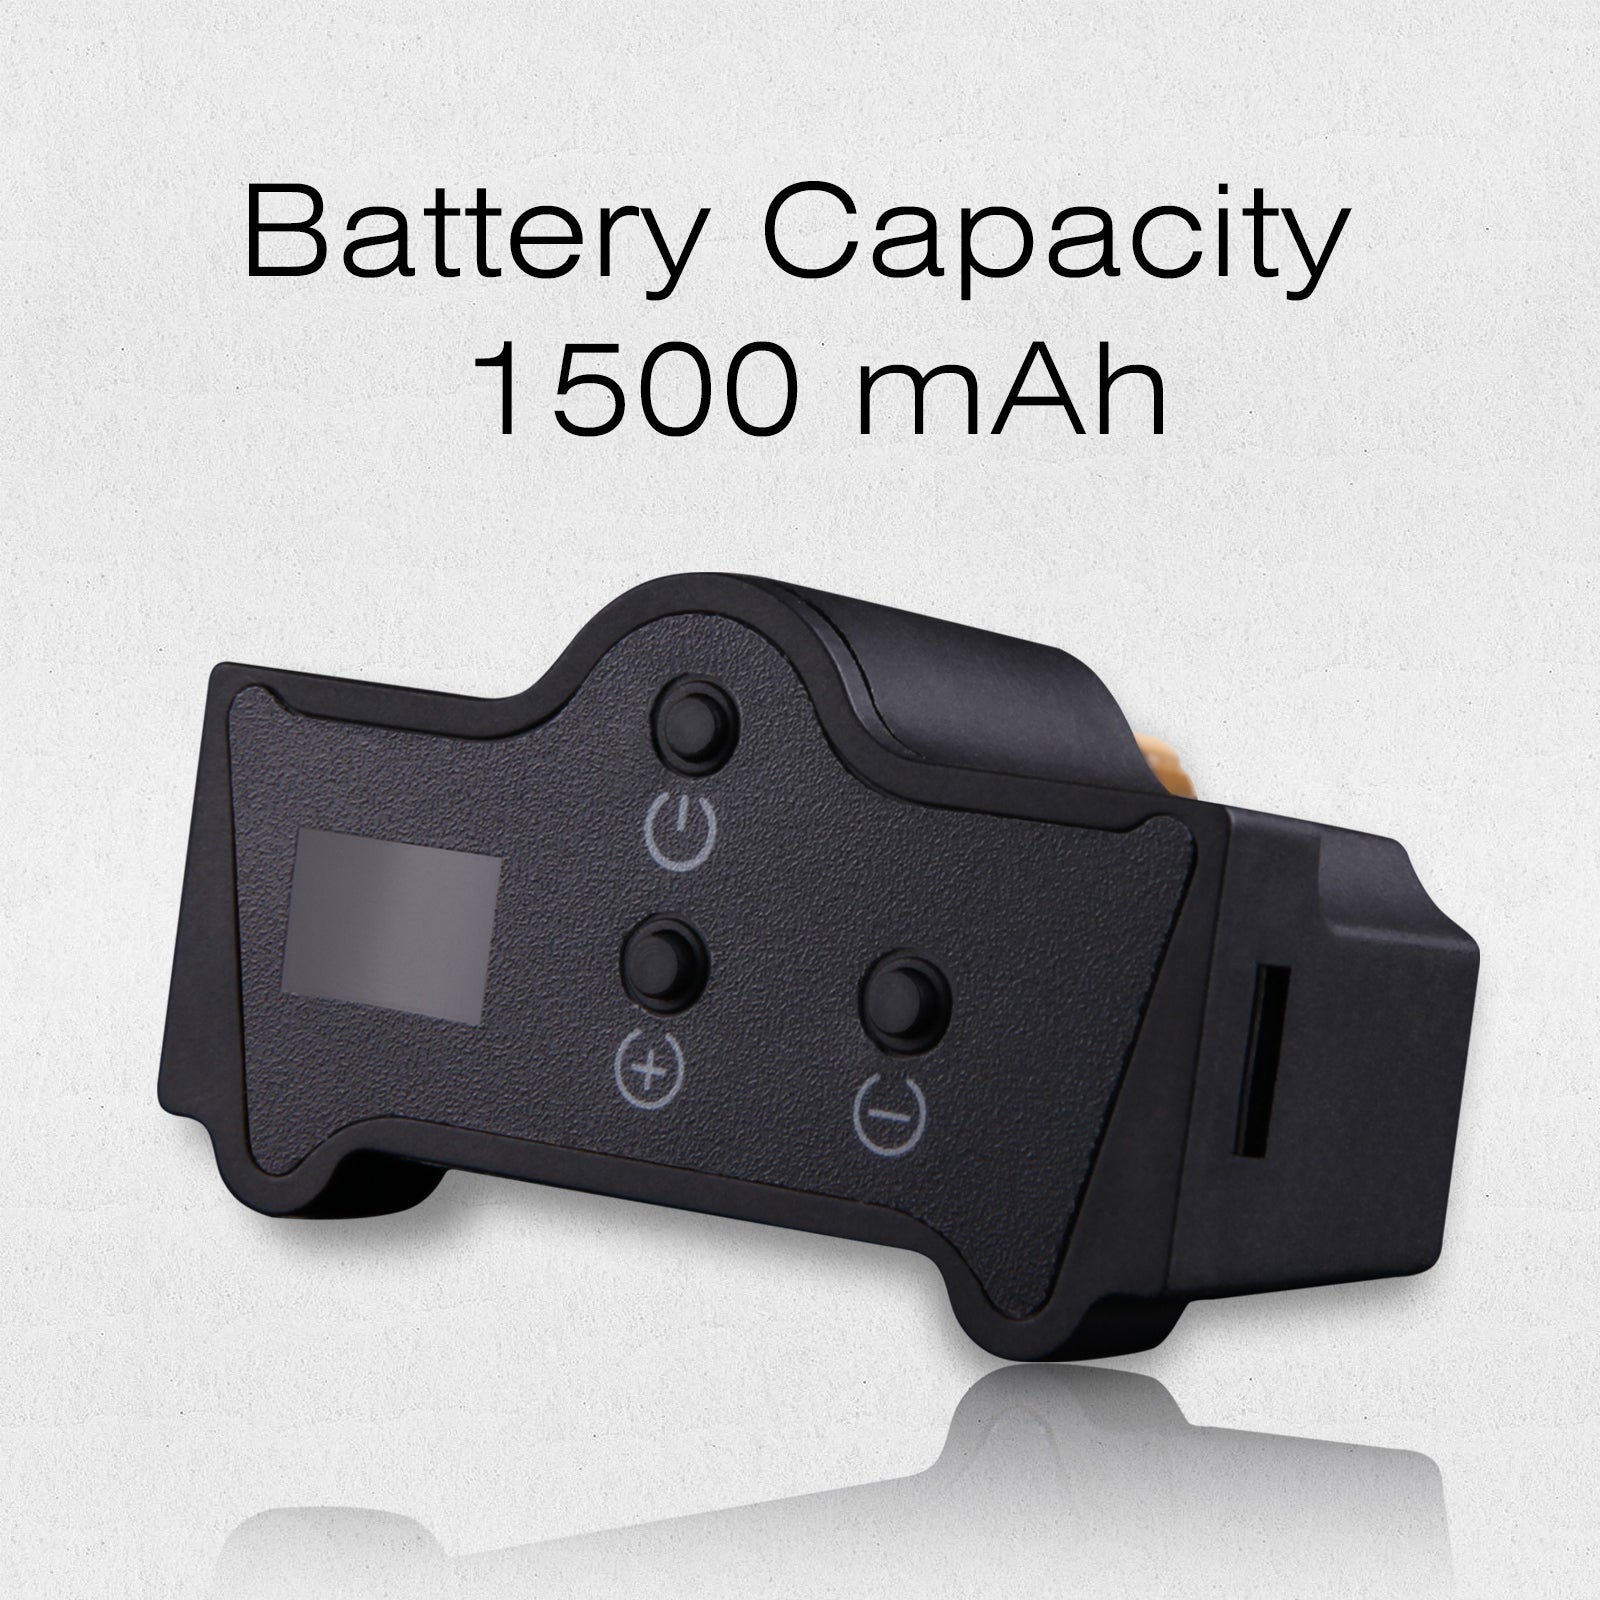 tattoo battery pack battery capacity is1500 mah 